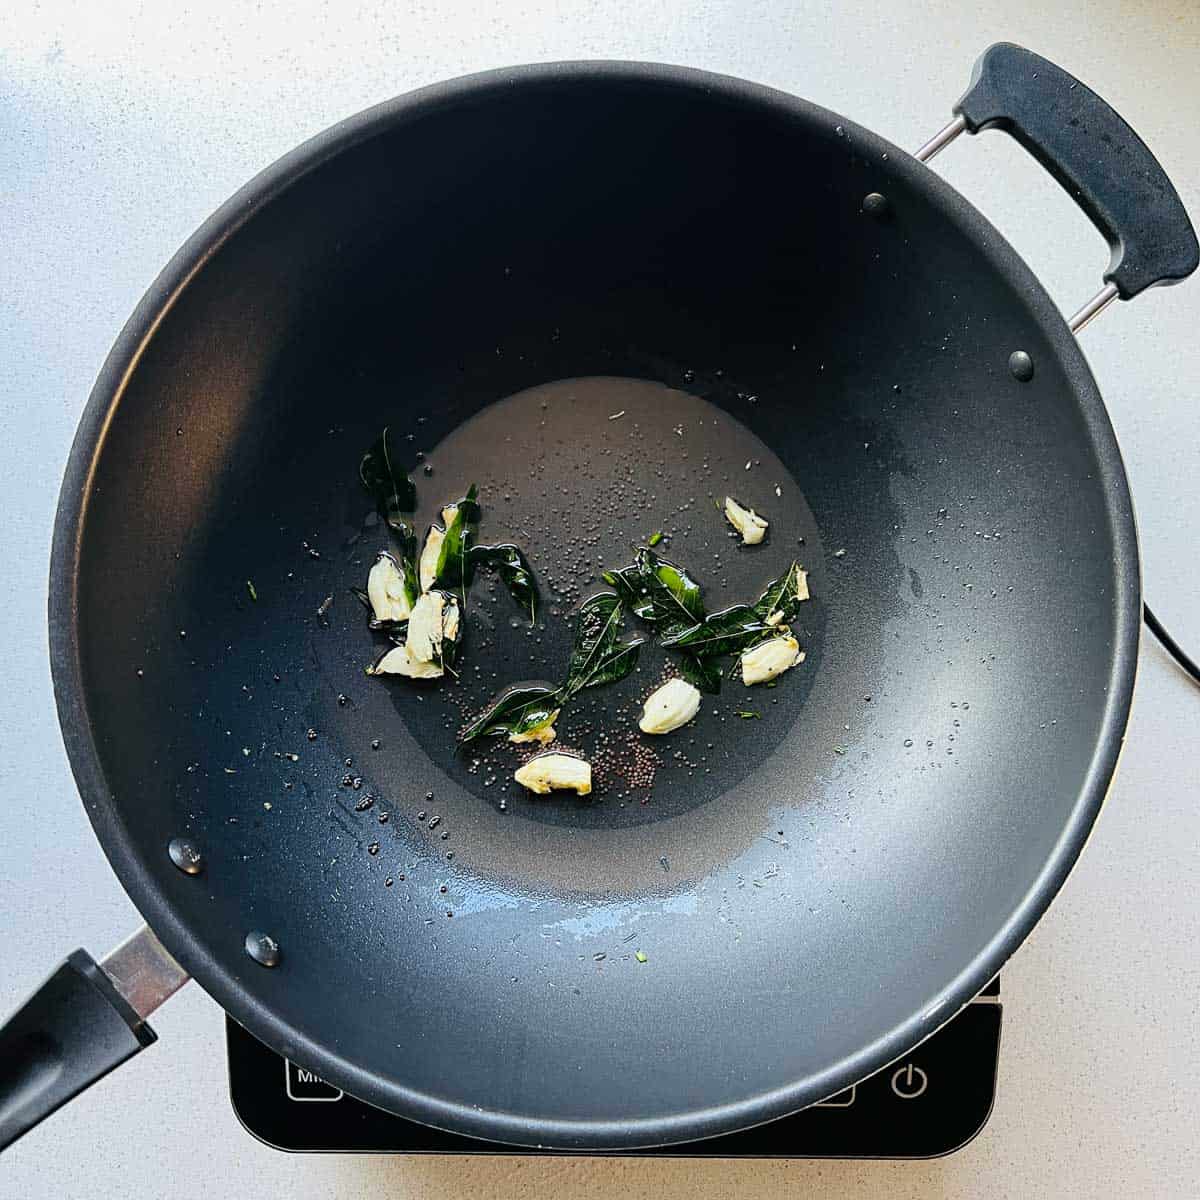 Garlic tempering in a frying pan.